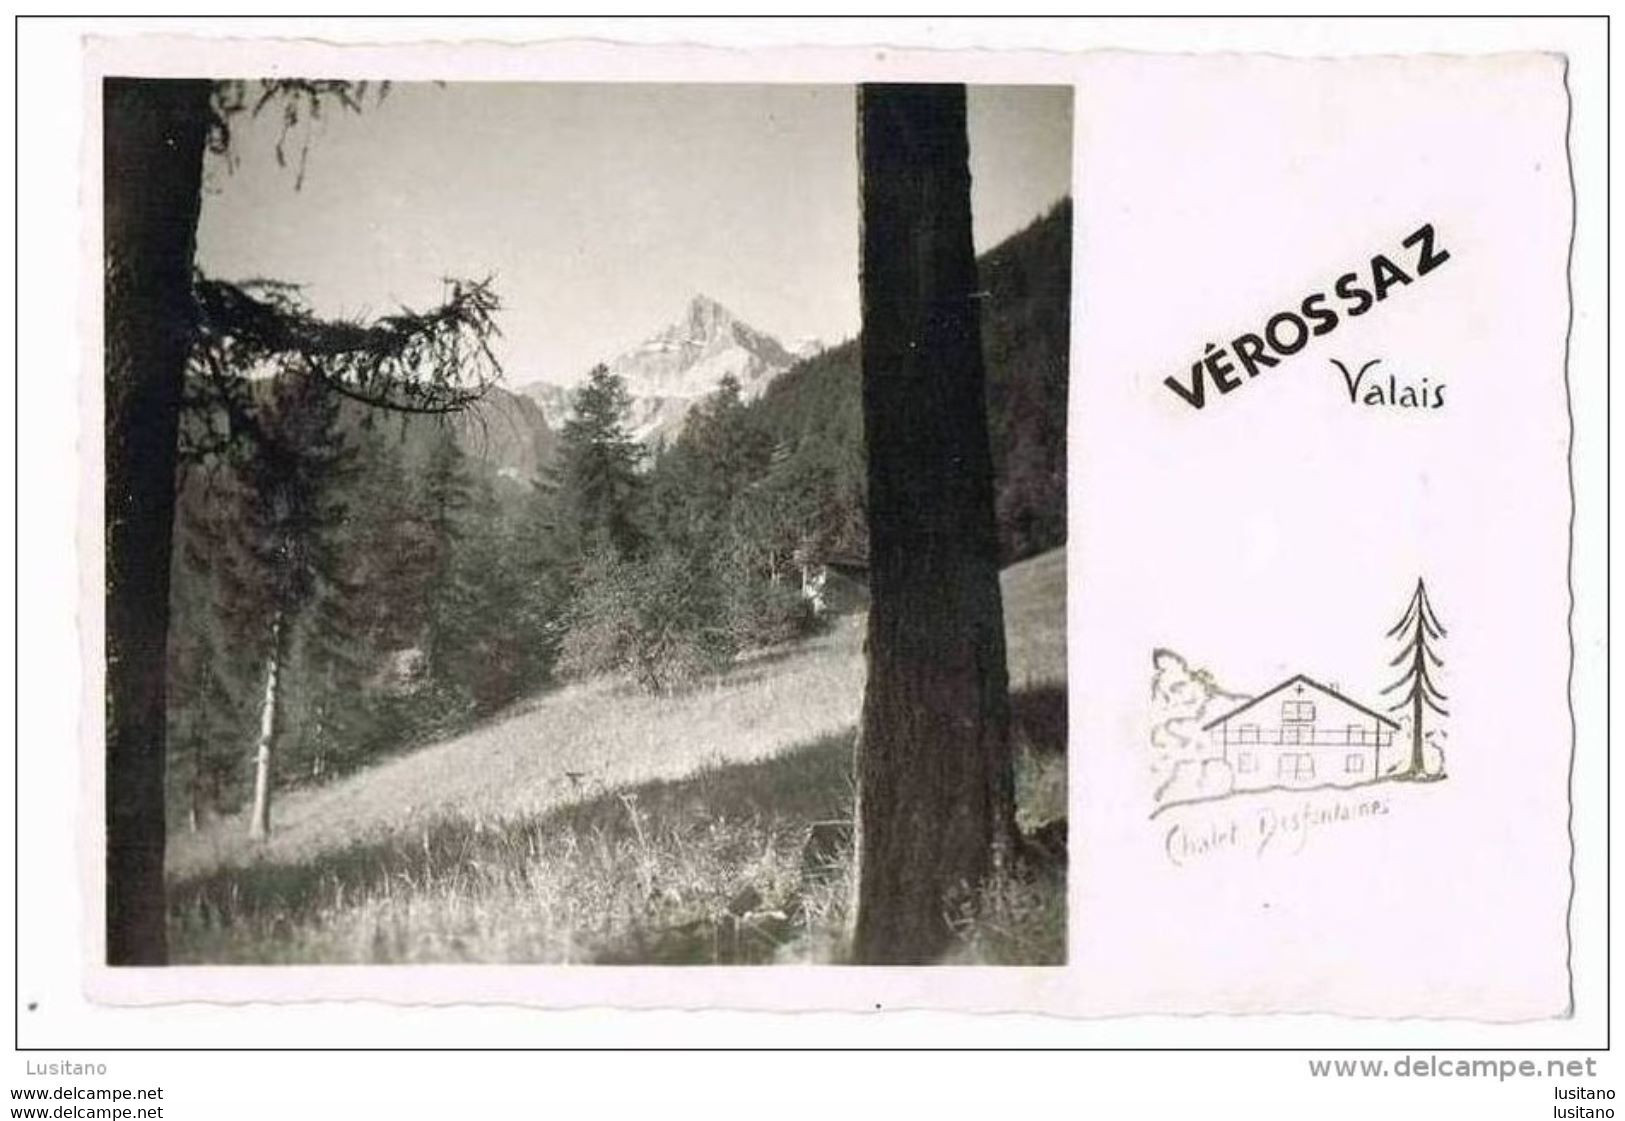 Verossaz - Valais - Chalet Desfontaines - Suisse - Timbre - Switzerland - Vérossaz